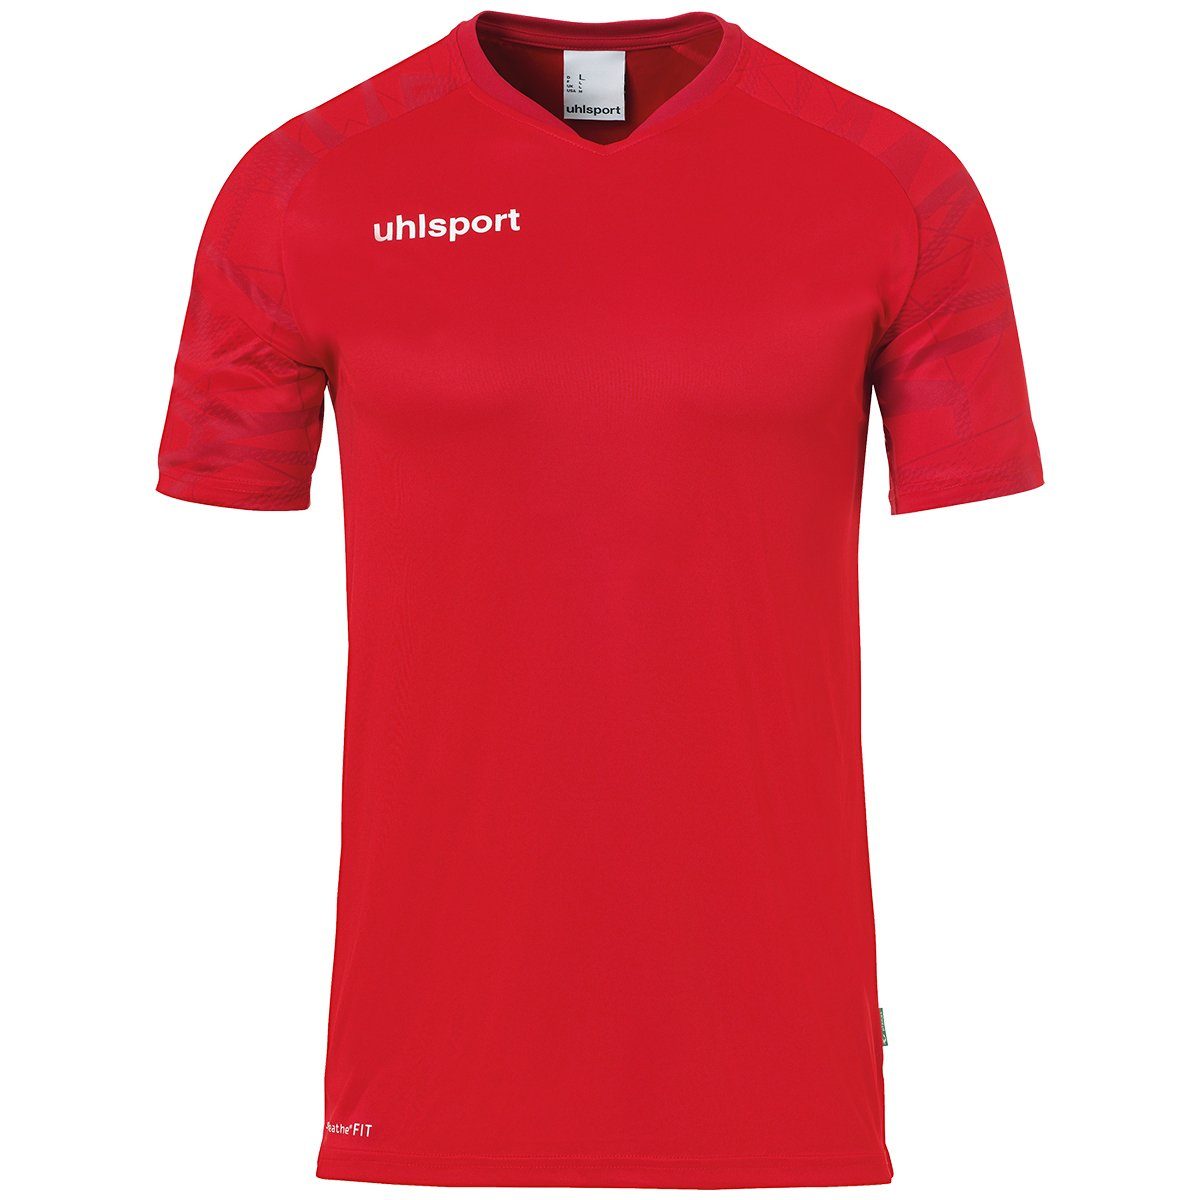 atmungsaktiv KURZARM rot/weiß Trainingsshirt 25 Trainings-T-Shirt uhlsport GOAL TRIKOT uhlsport